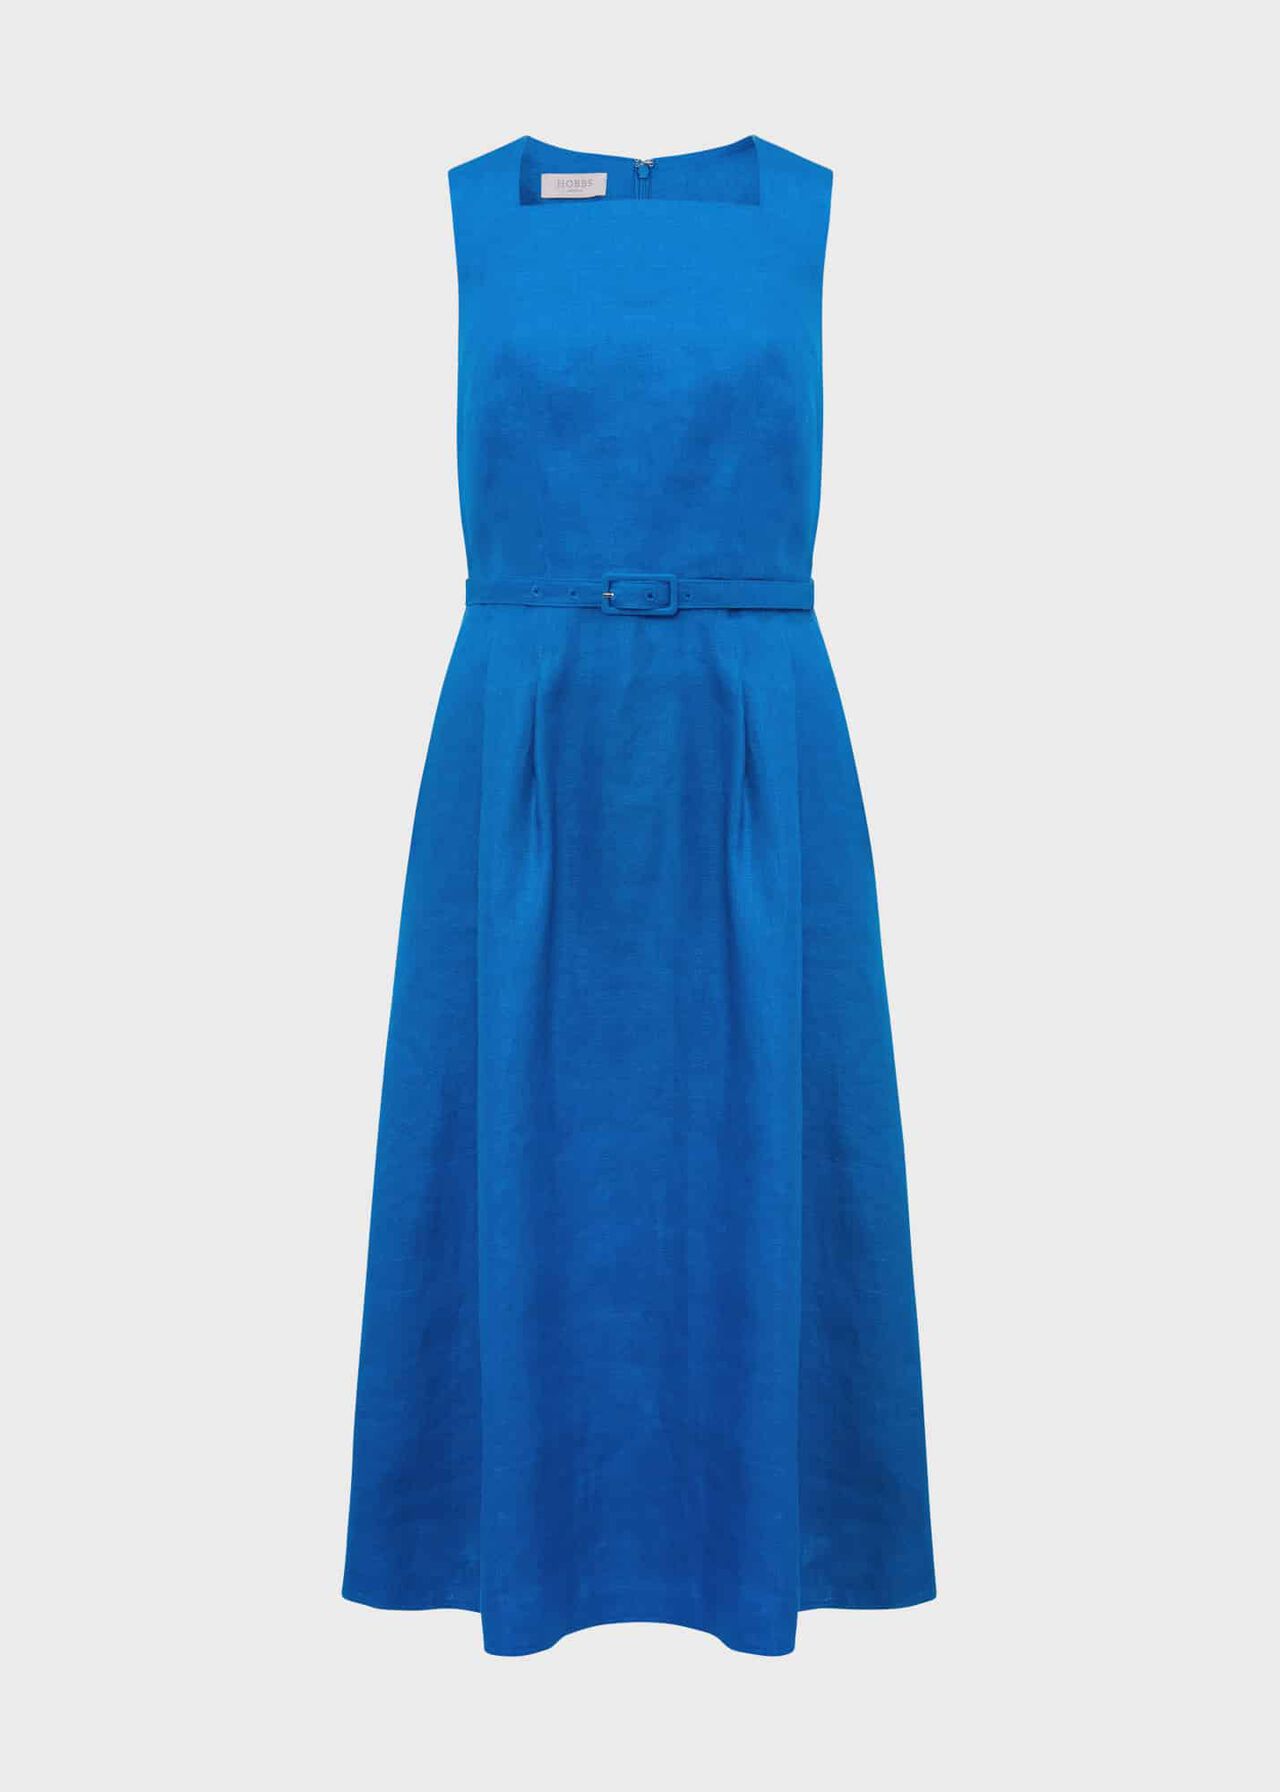 Jaida Dress, Imperial Blue, hi-res